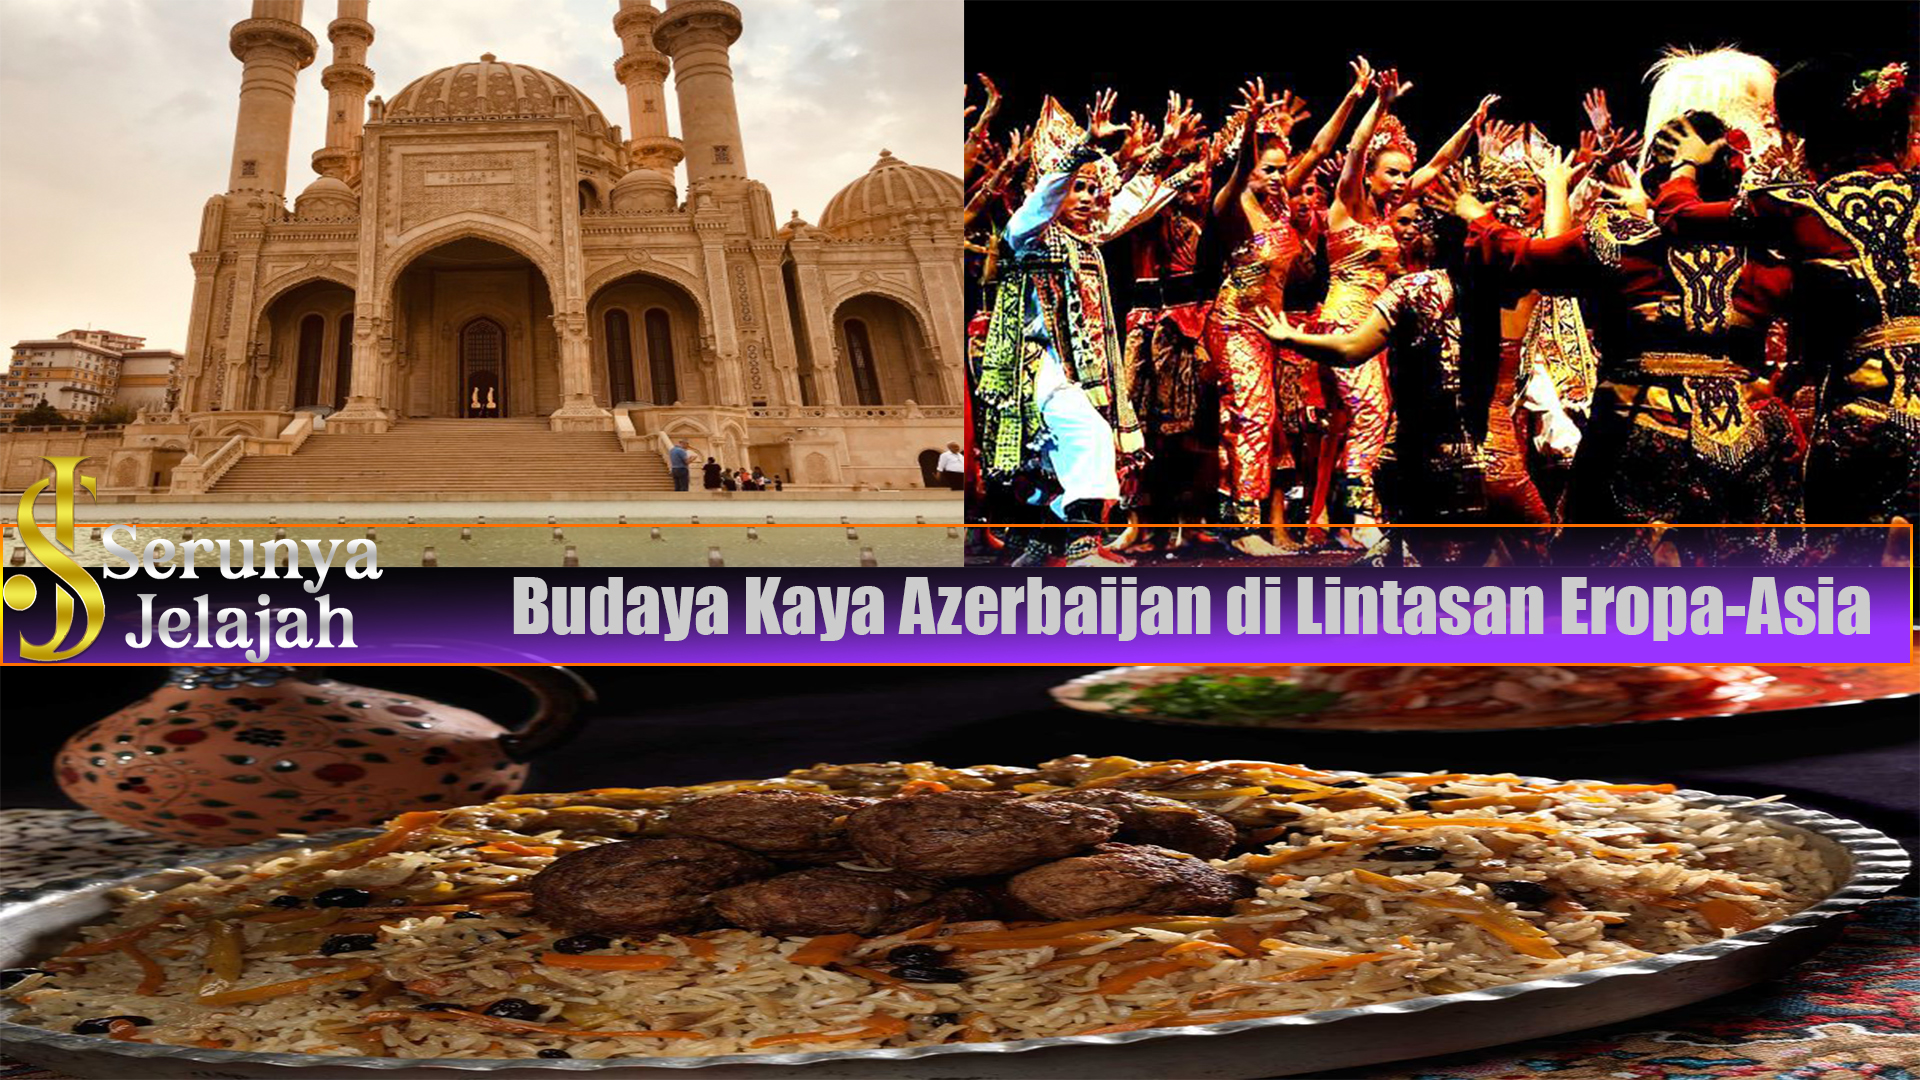 Budaya Kaya Azerbaijan di Lintasan Eropa-Asia